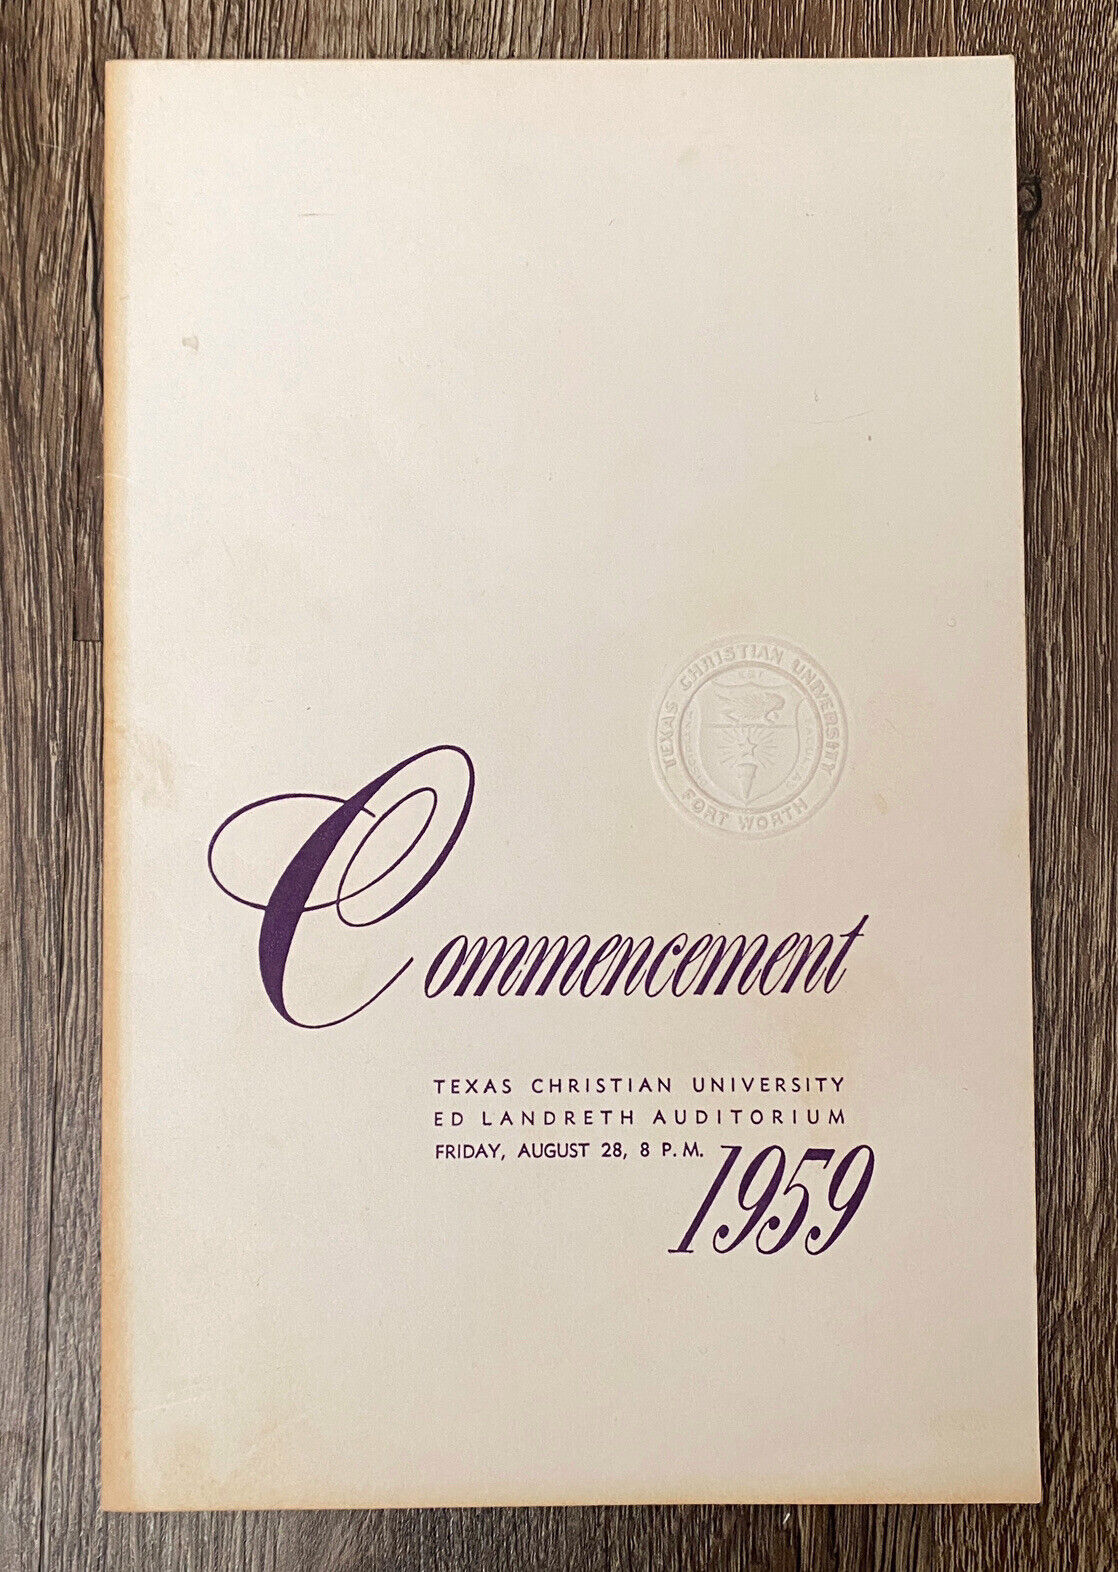 1959 Texas Christian University College Commencement Program